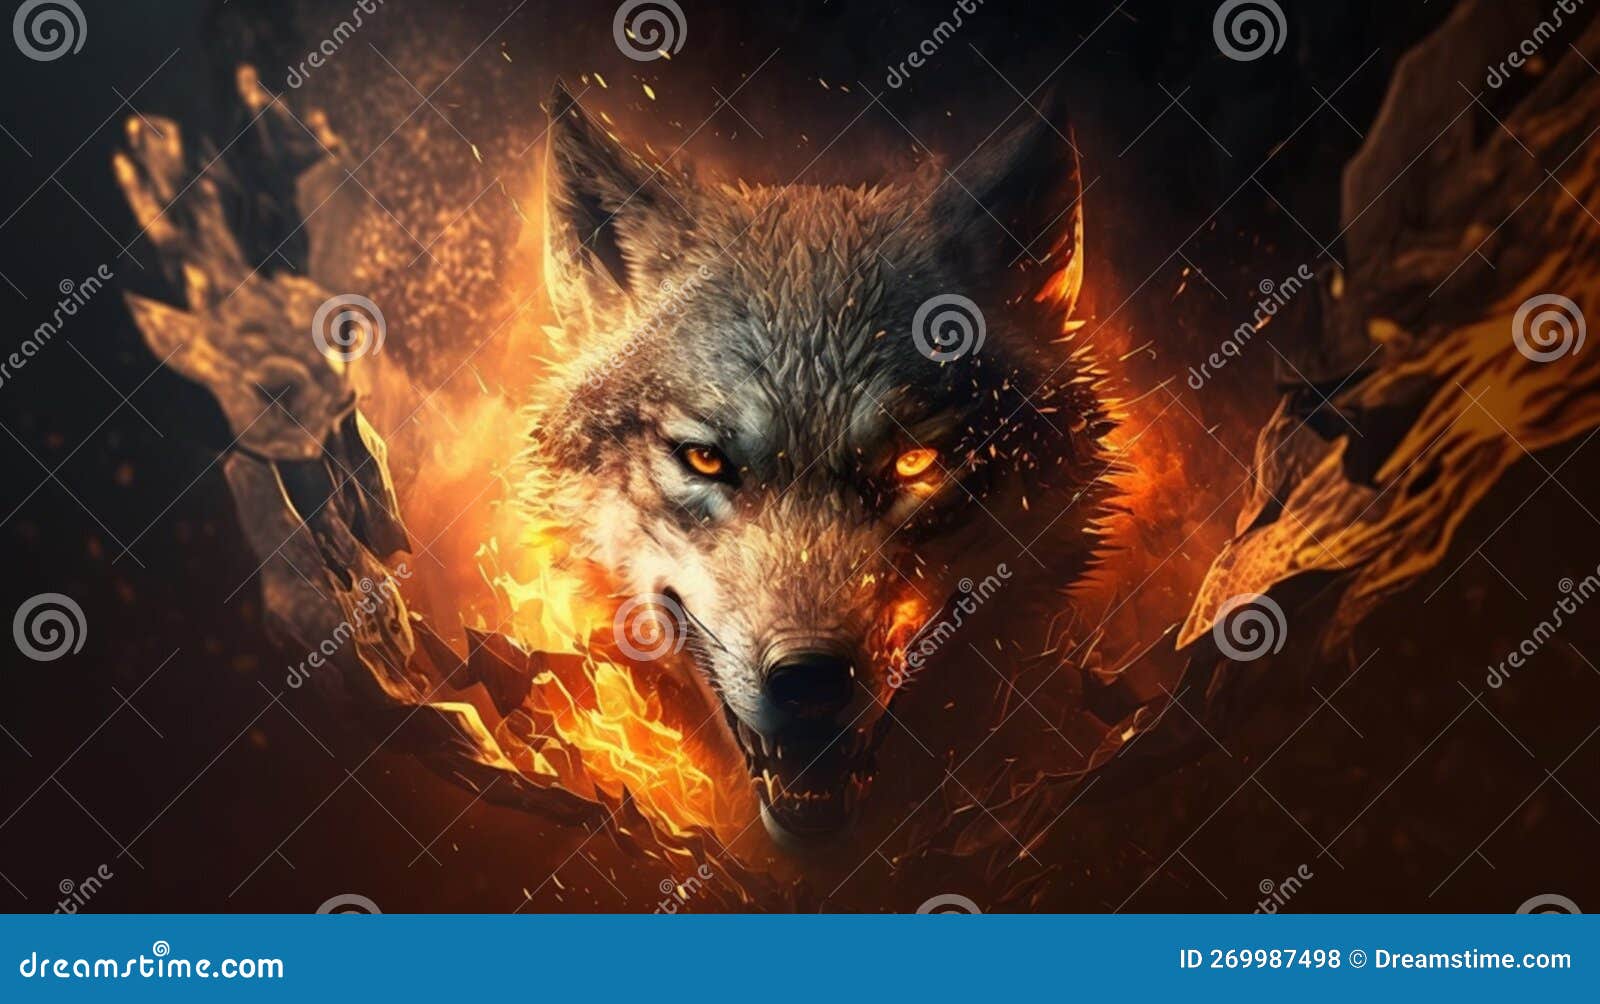 48+] Fire Wolf Wallpaper - WallpaperSafari